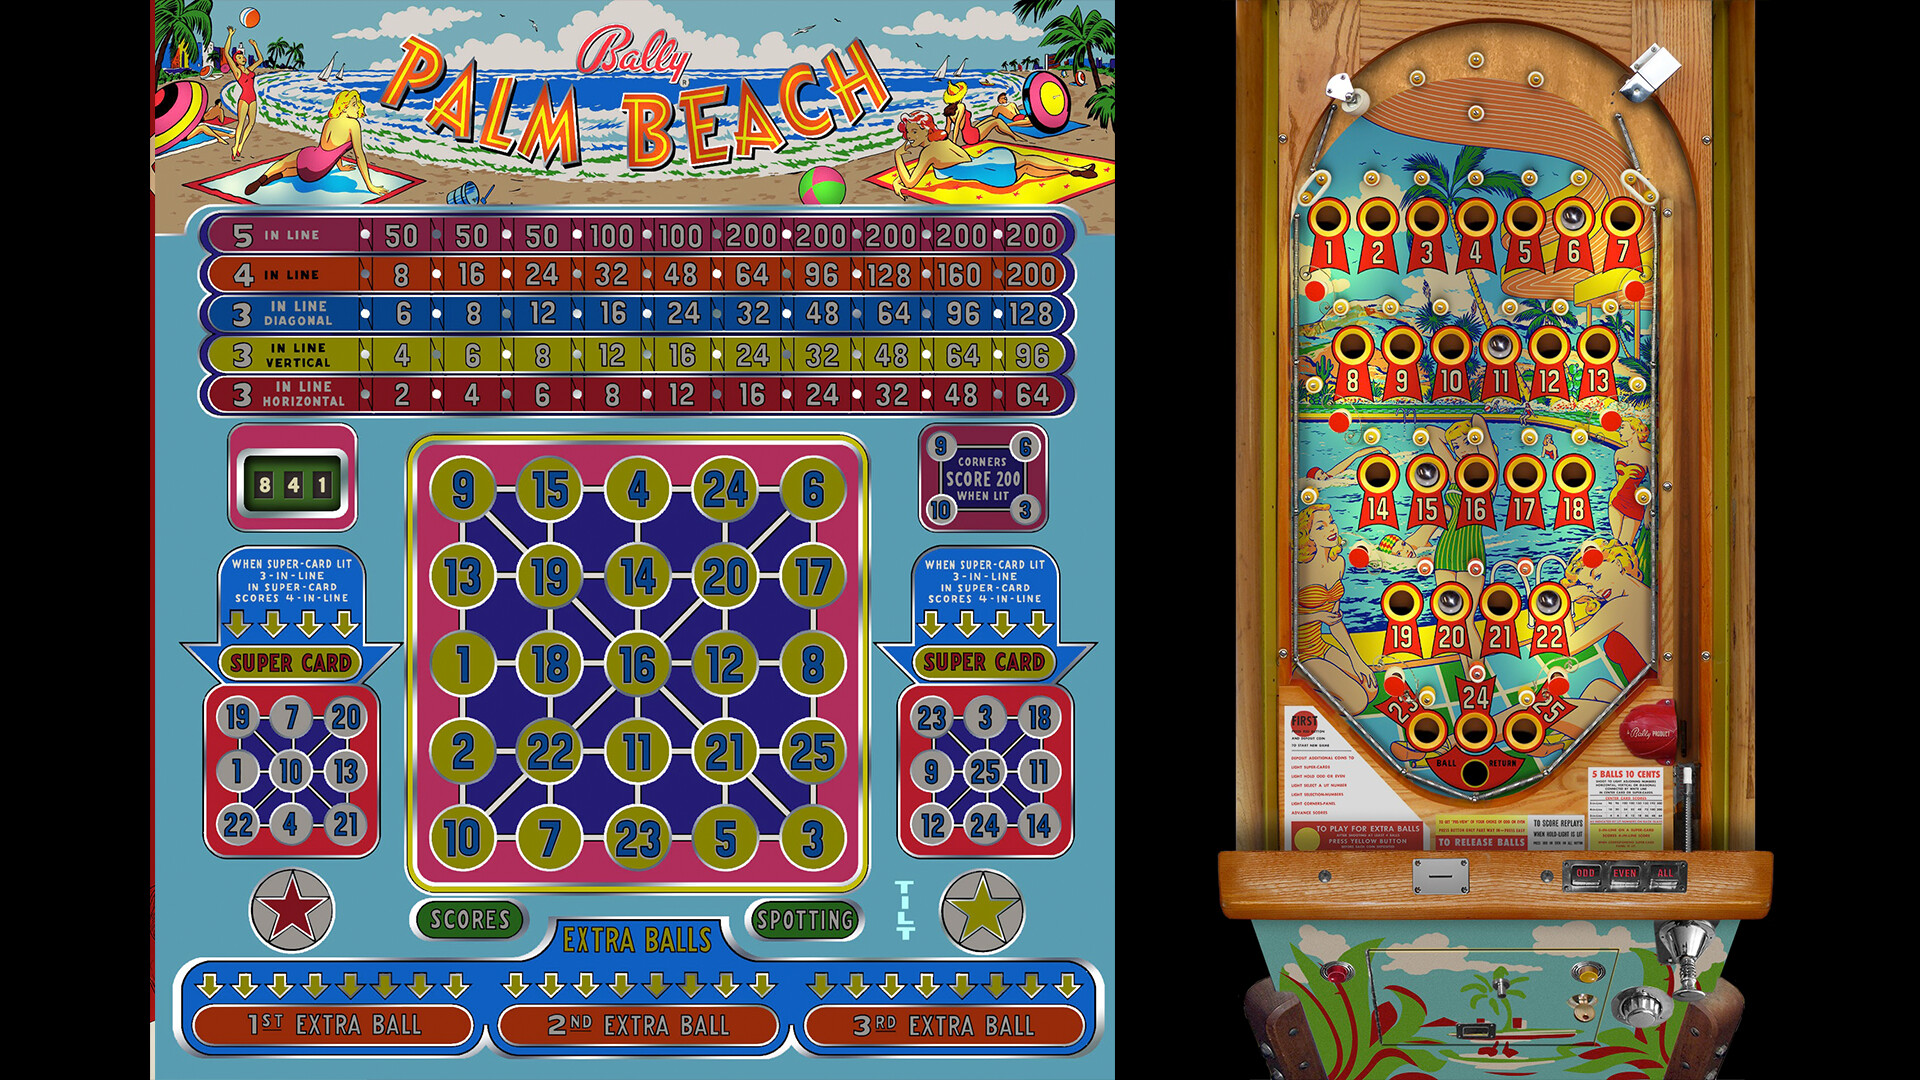 Bingo Pinball Gameroom - Bally Palm Beach Featured Screenshot #1